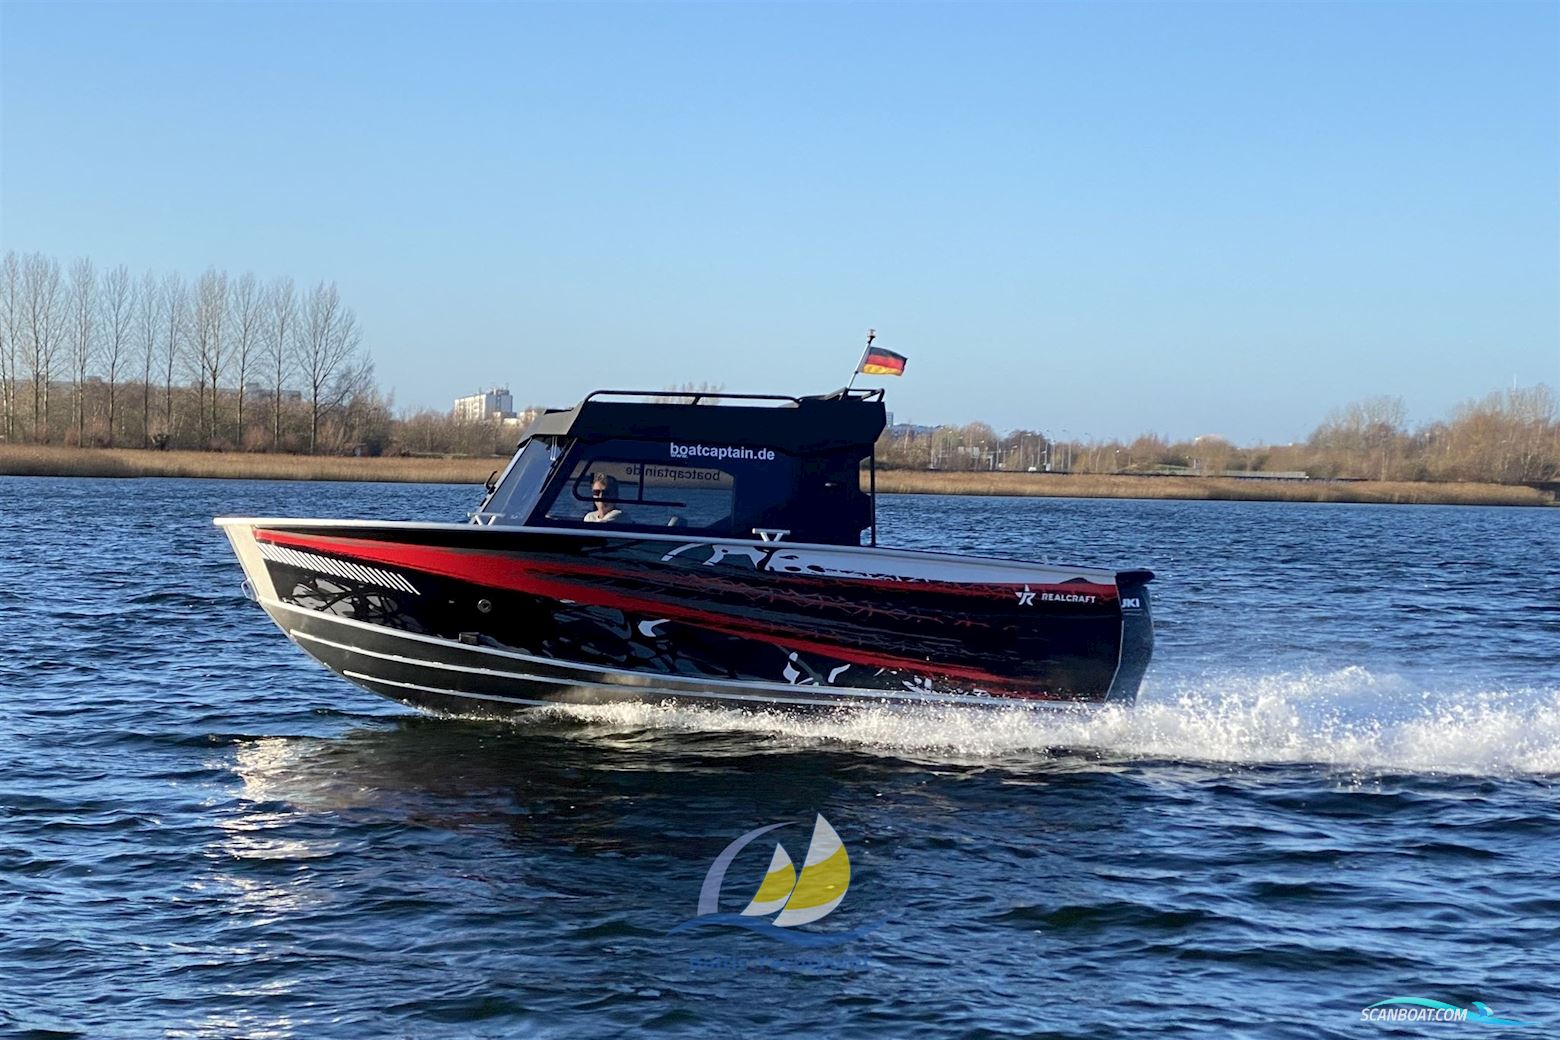 Realcraft 600 Cabine Motor boat 2021, with Suzuki engine, Germany